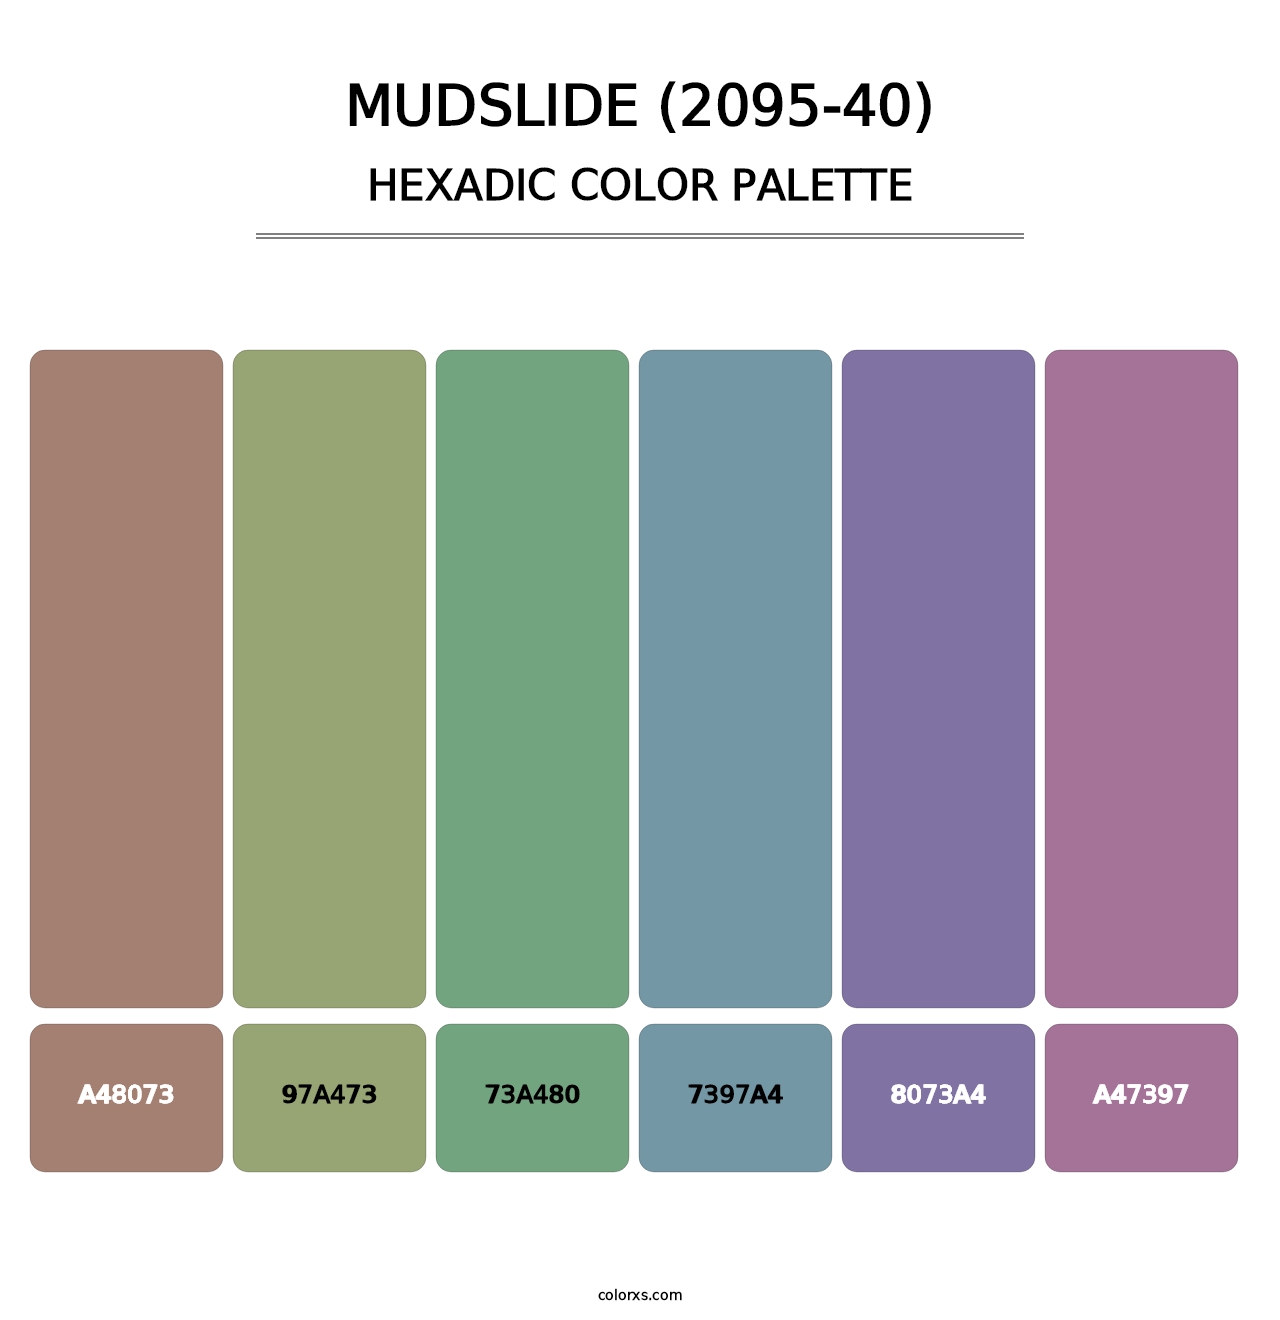 Mudslide (2095-40) - Hexadic Color Palette